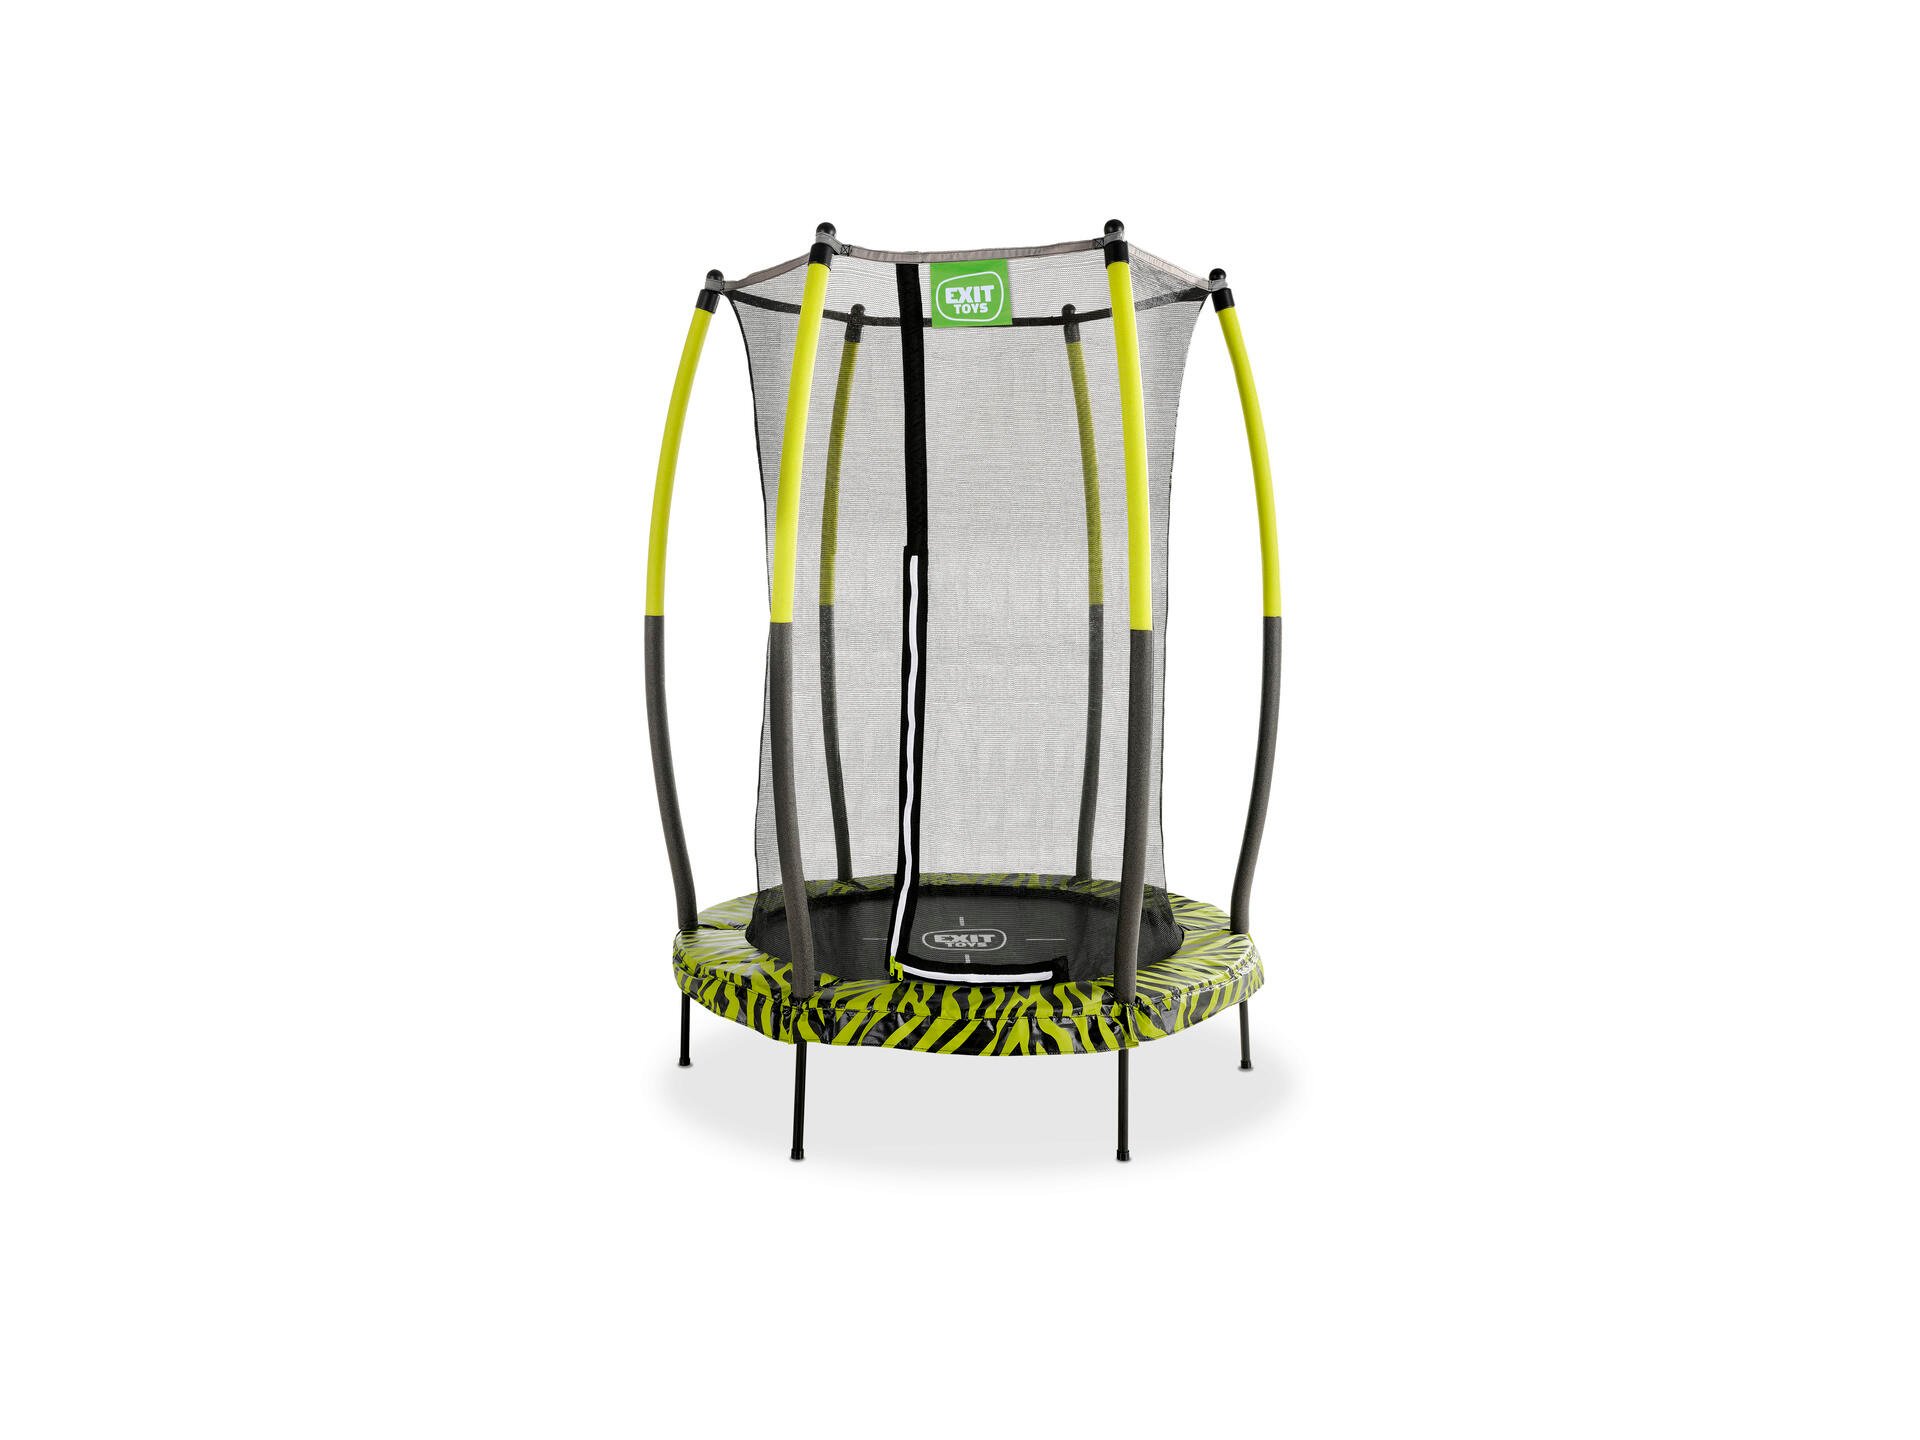 Exit Toys Tiggy Junior trampoline 140cm + veiligheidsnet zwart/groen